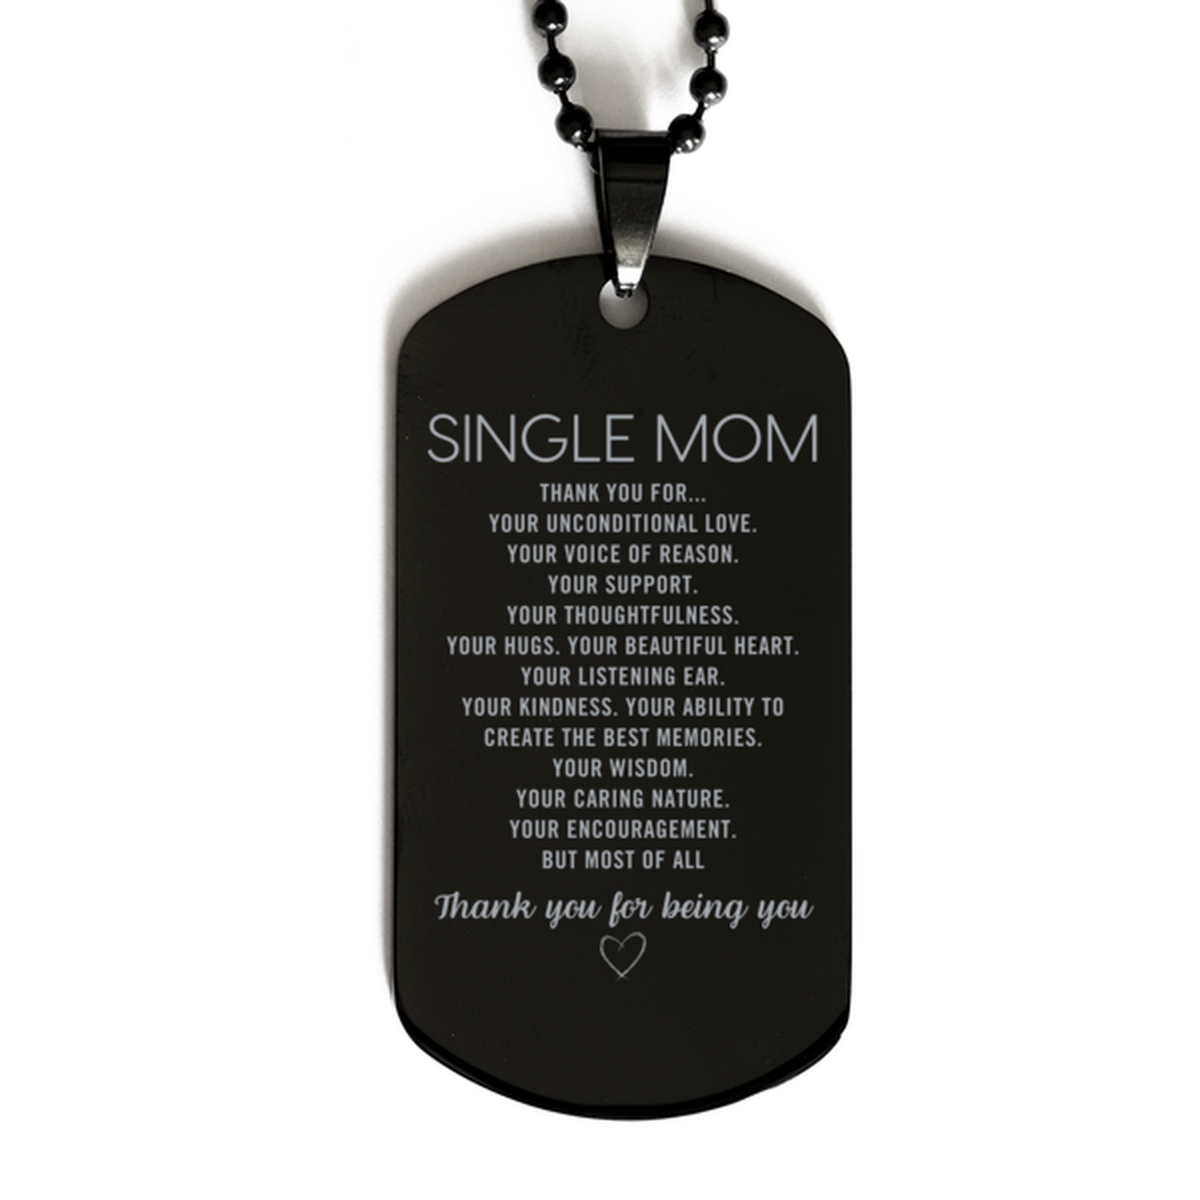 Single Mom Black Dog Tag Custom, Engraved Gifts For Single Mom Christmas Graduation Birthday Gifts for Men Women Single Mom Thank you for Your unconditional love